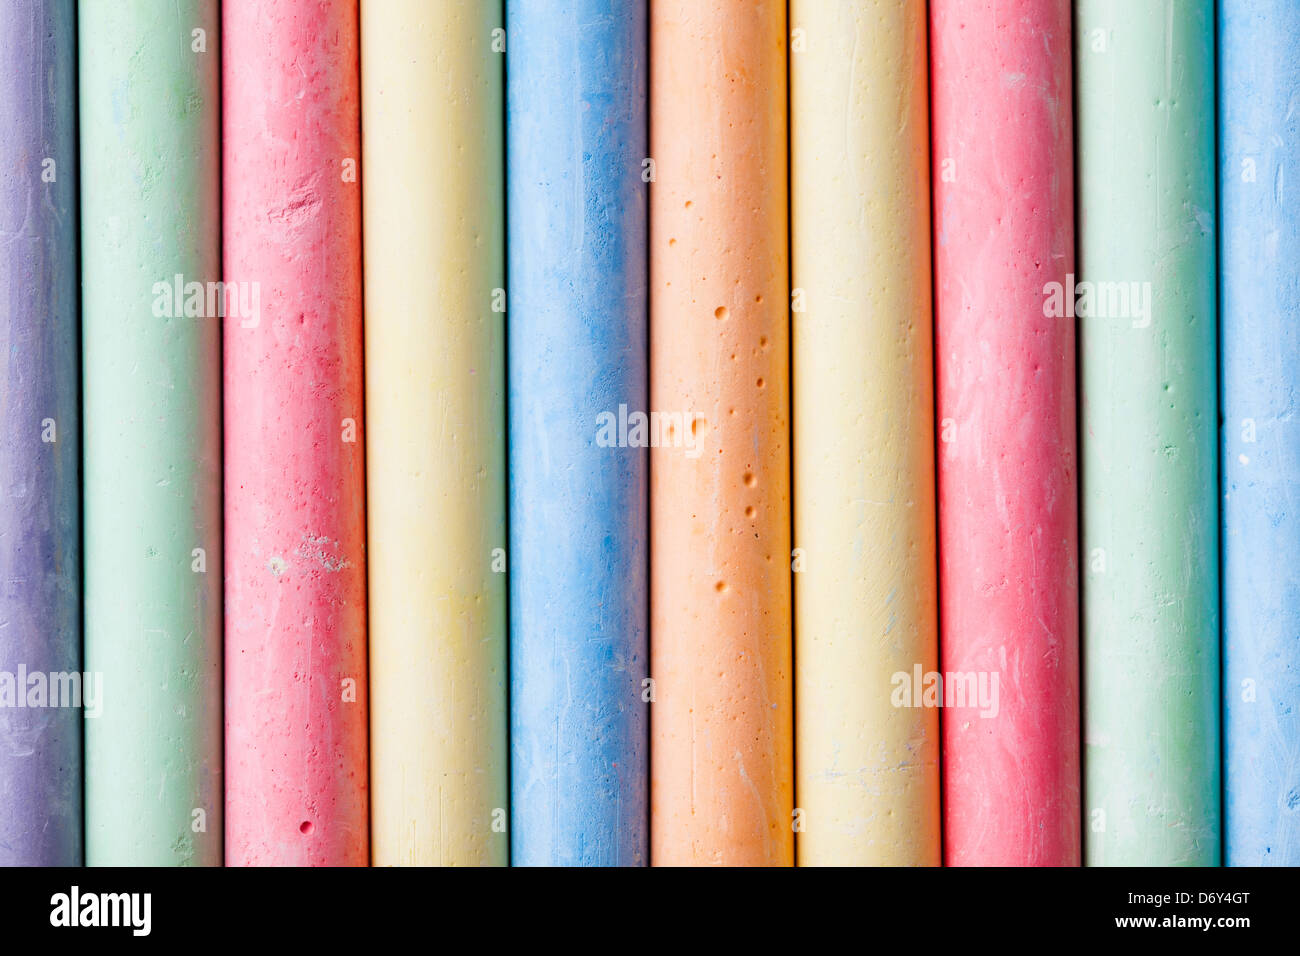 chalks pieces colorful row closeup Stock Photo